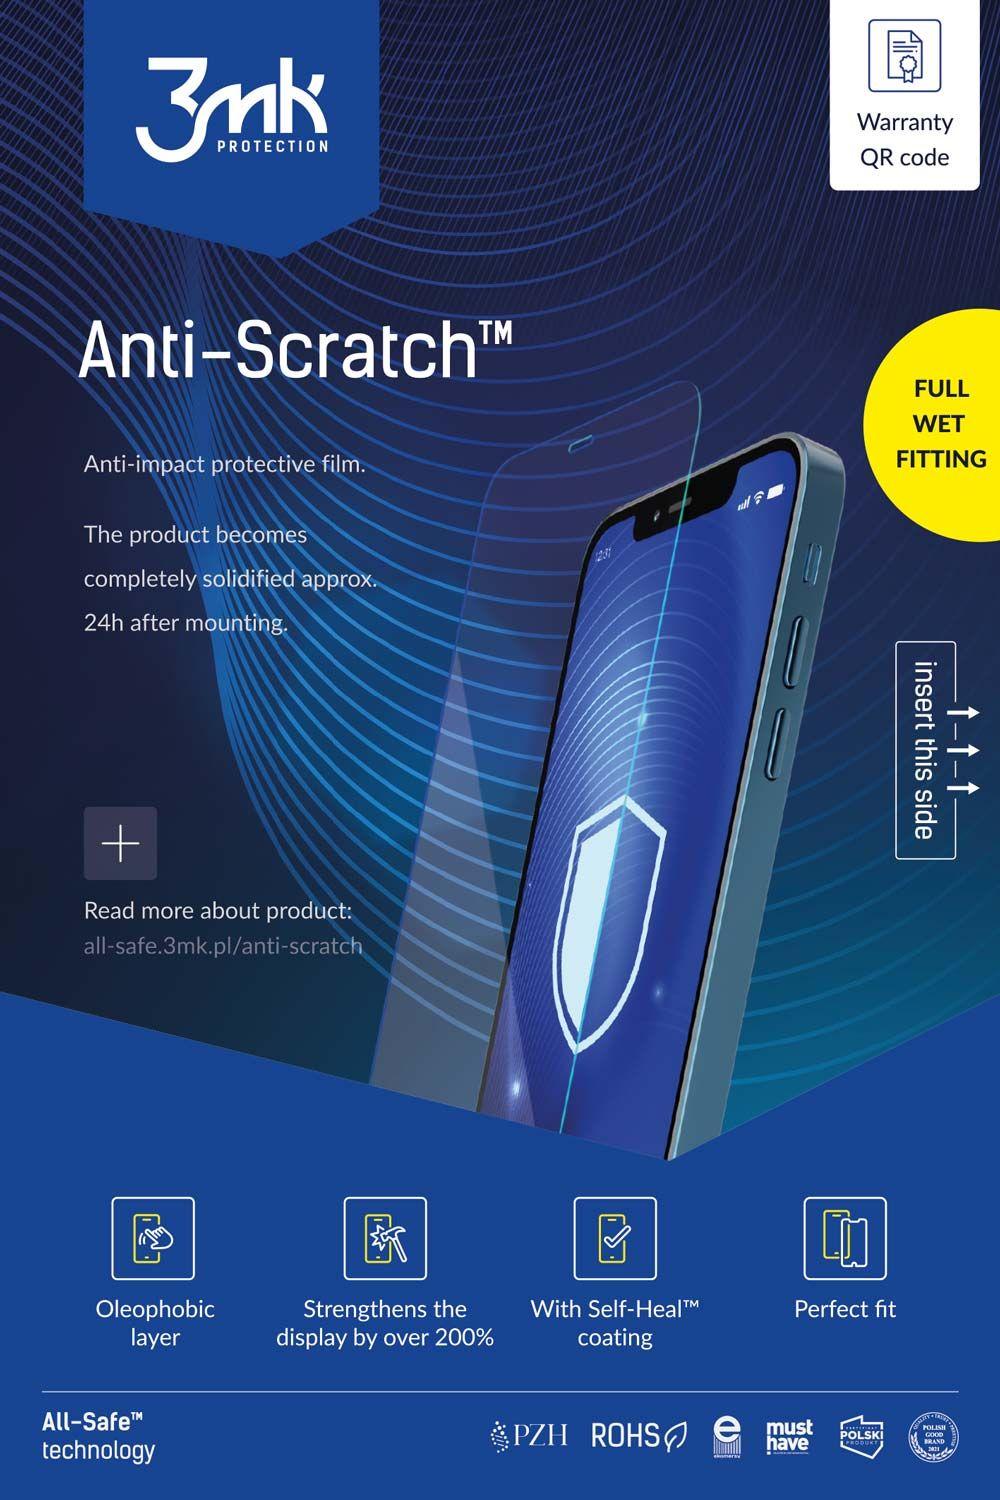 3MK Ochranná fólie All-Safe - AIO Anti-Scratch Phone Full Wet Fittting 5ks